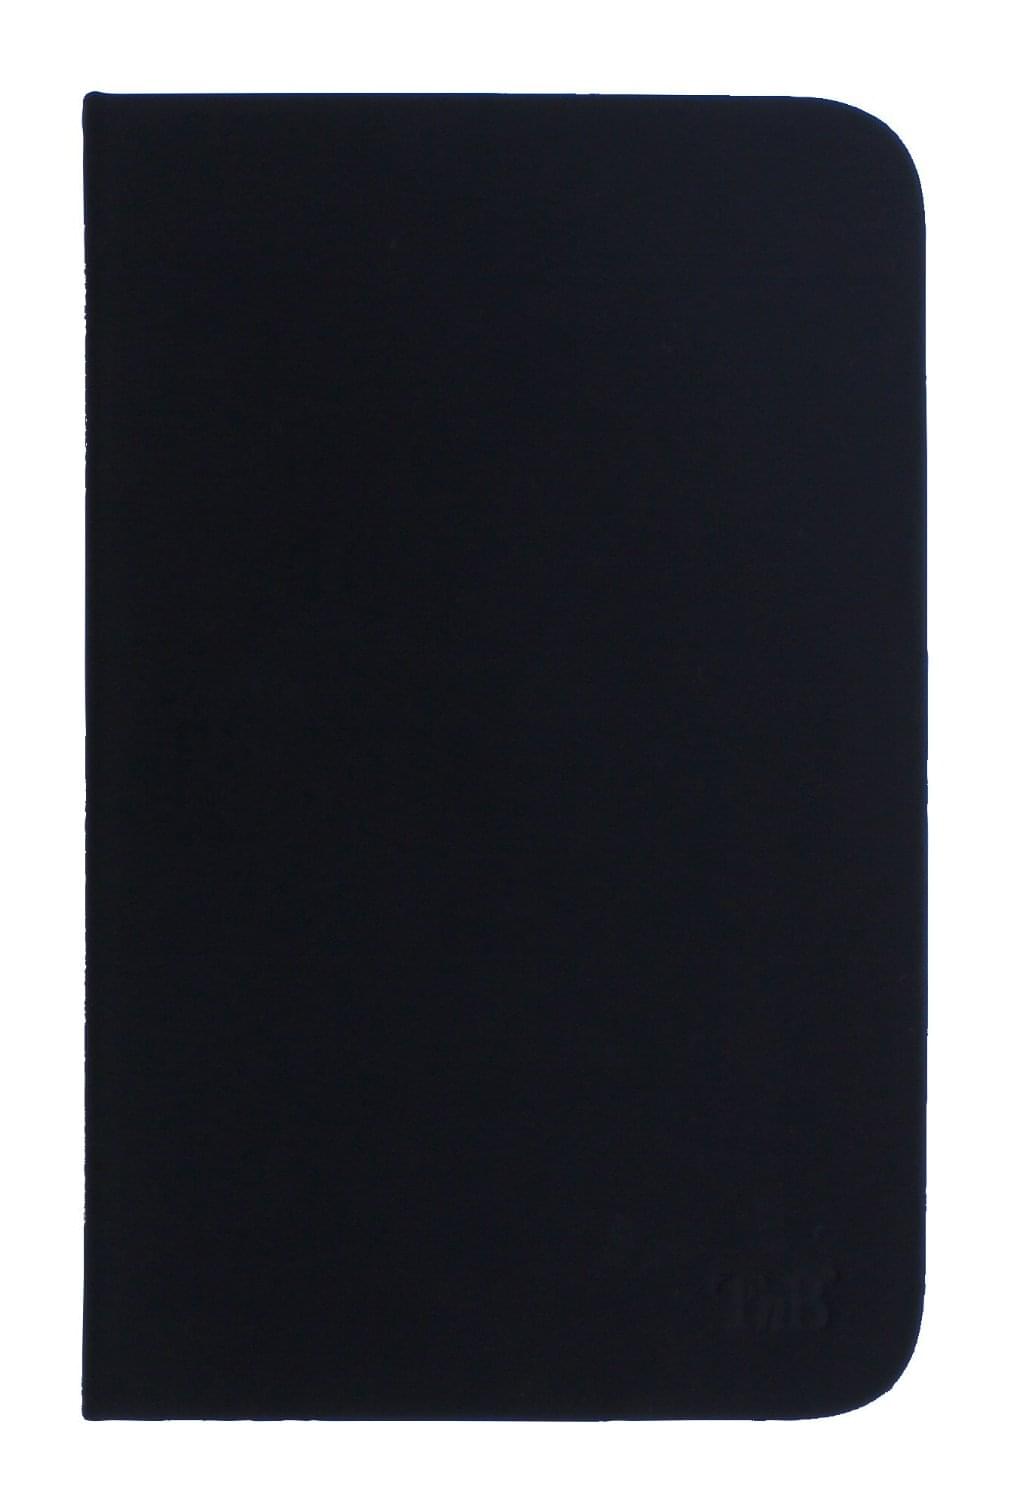 Accessoire tablette T'nB Folio Galaxy Tab 3 7" Noir